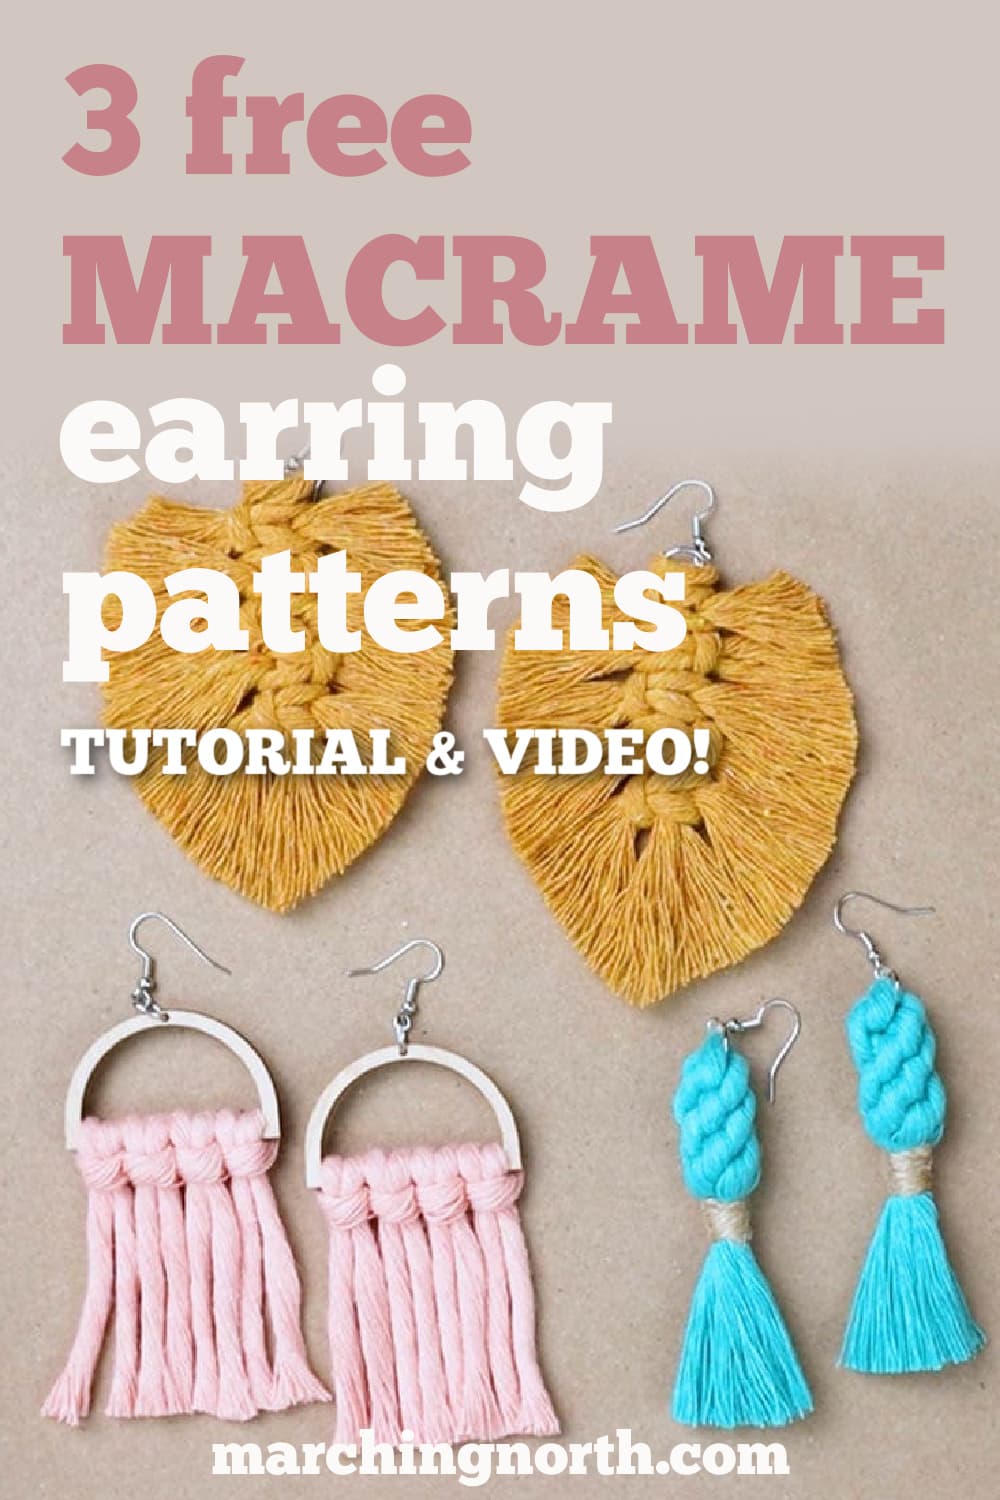 Pinterest pin for 3 free macrame earring patterns